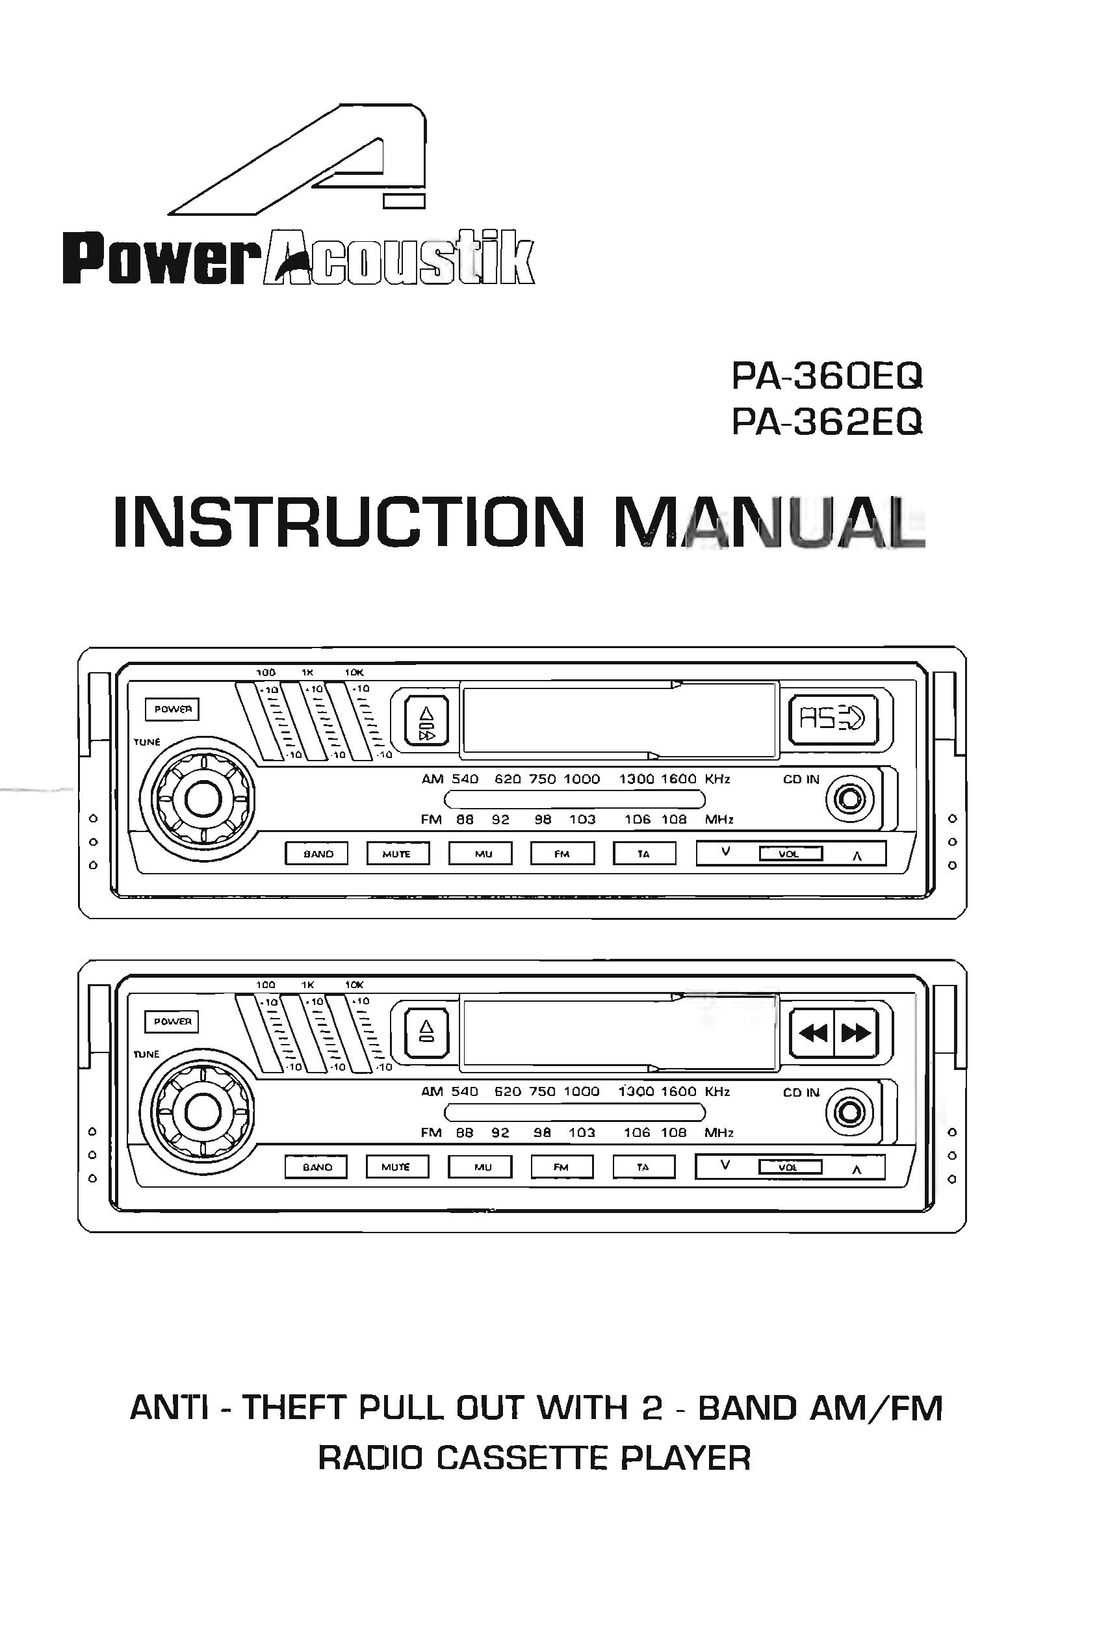 Power Acoustik PA-362EQ Car Stereo System User Manual